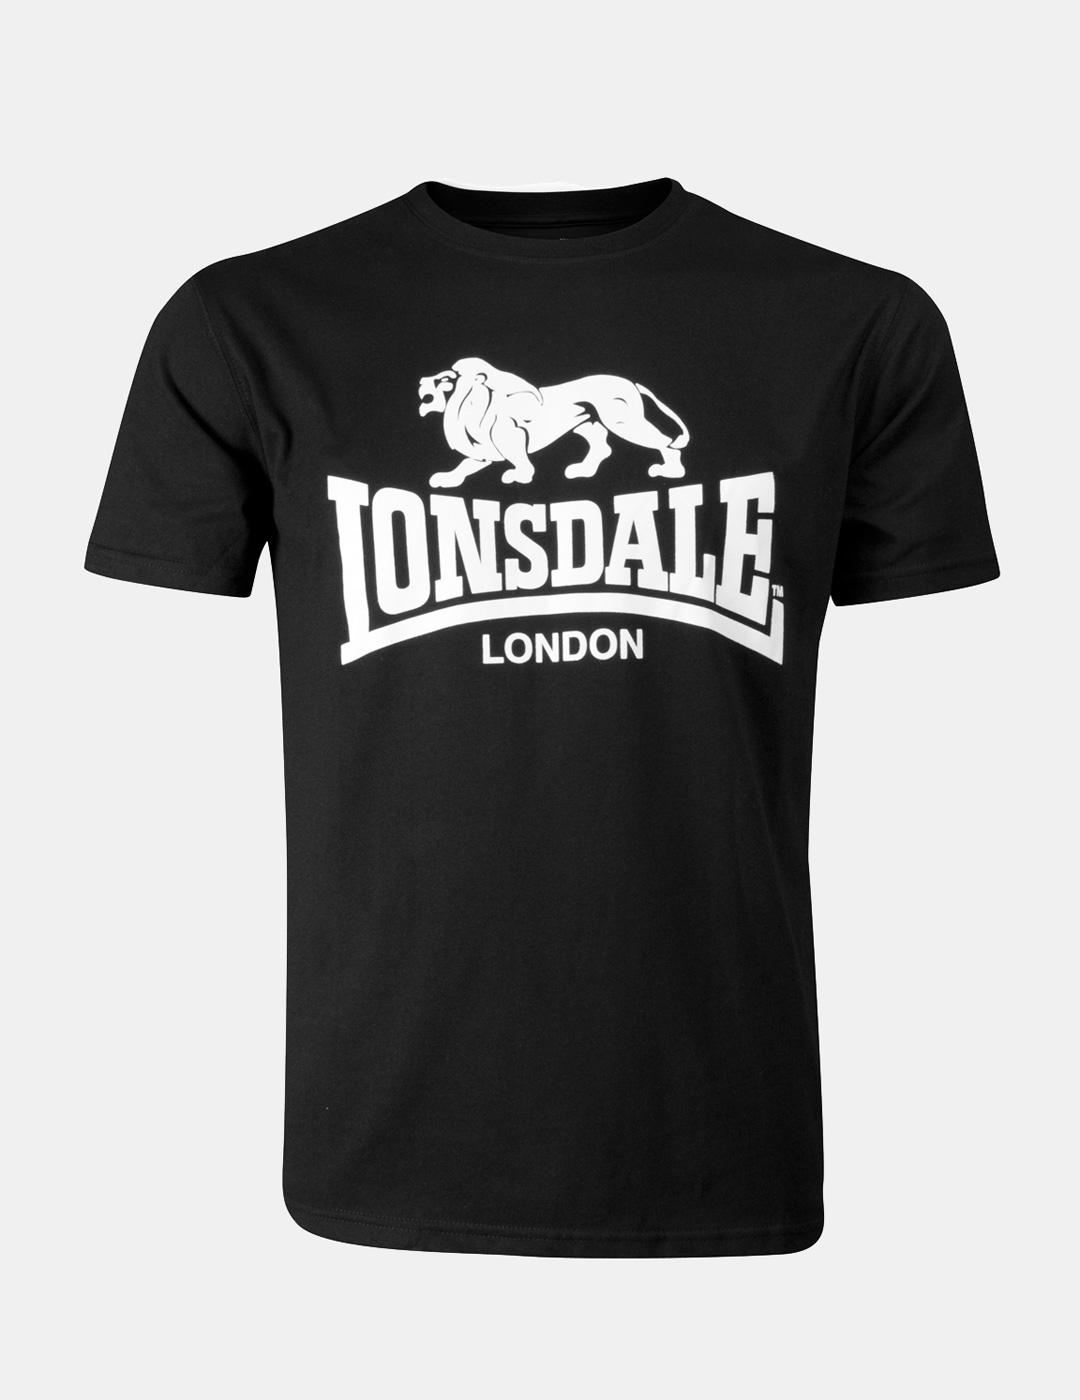 Camiseta lonsdale para hombre Silverhill